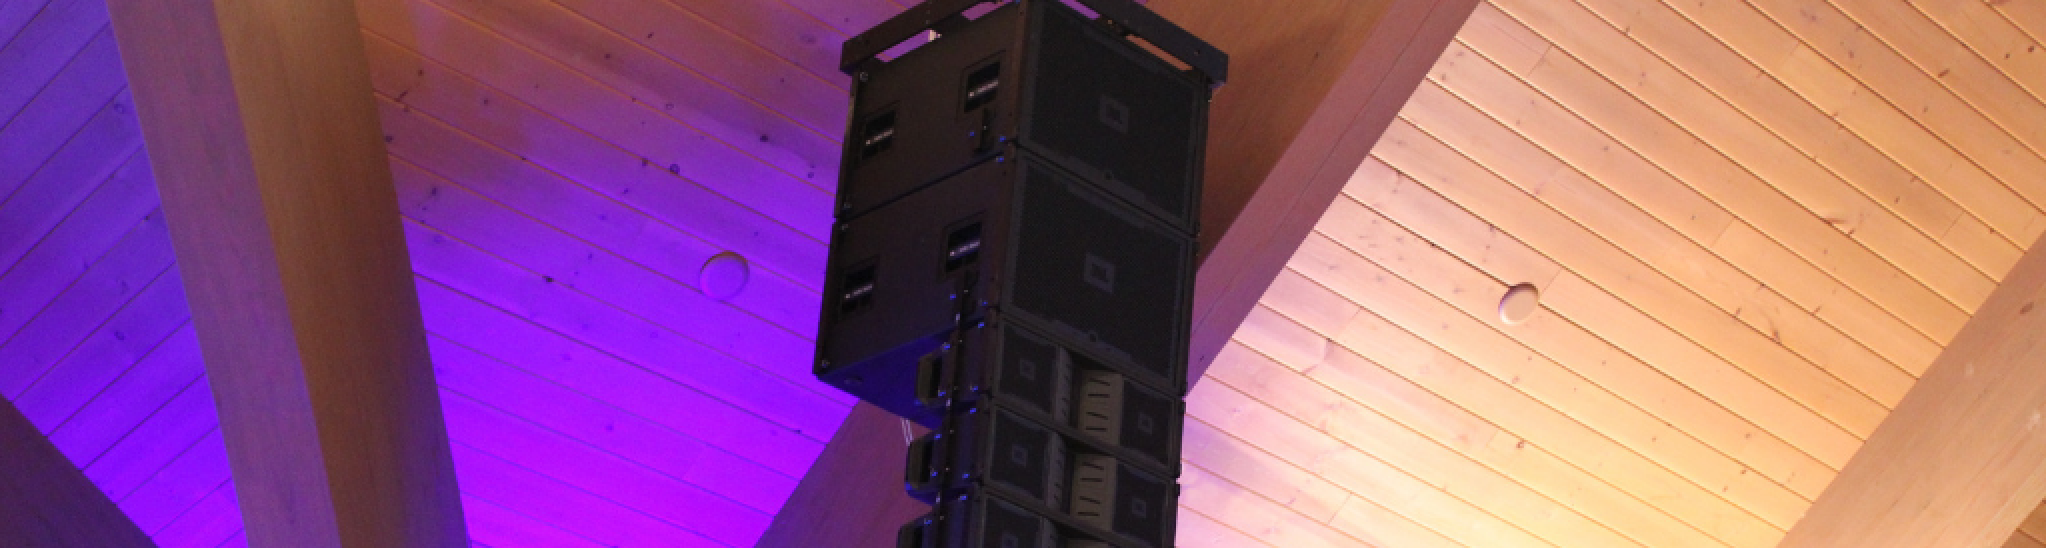 An image of a JBL speaker